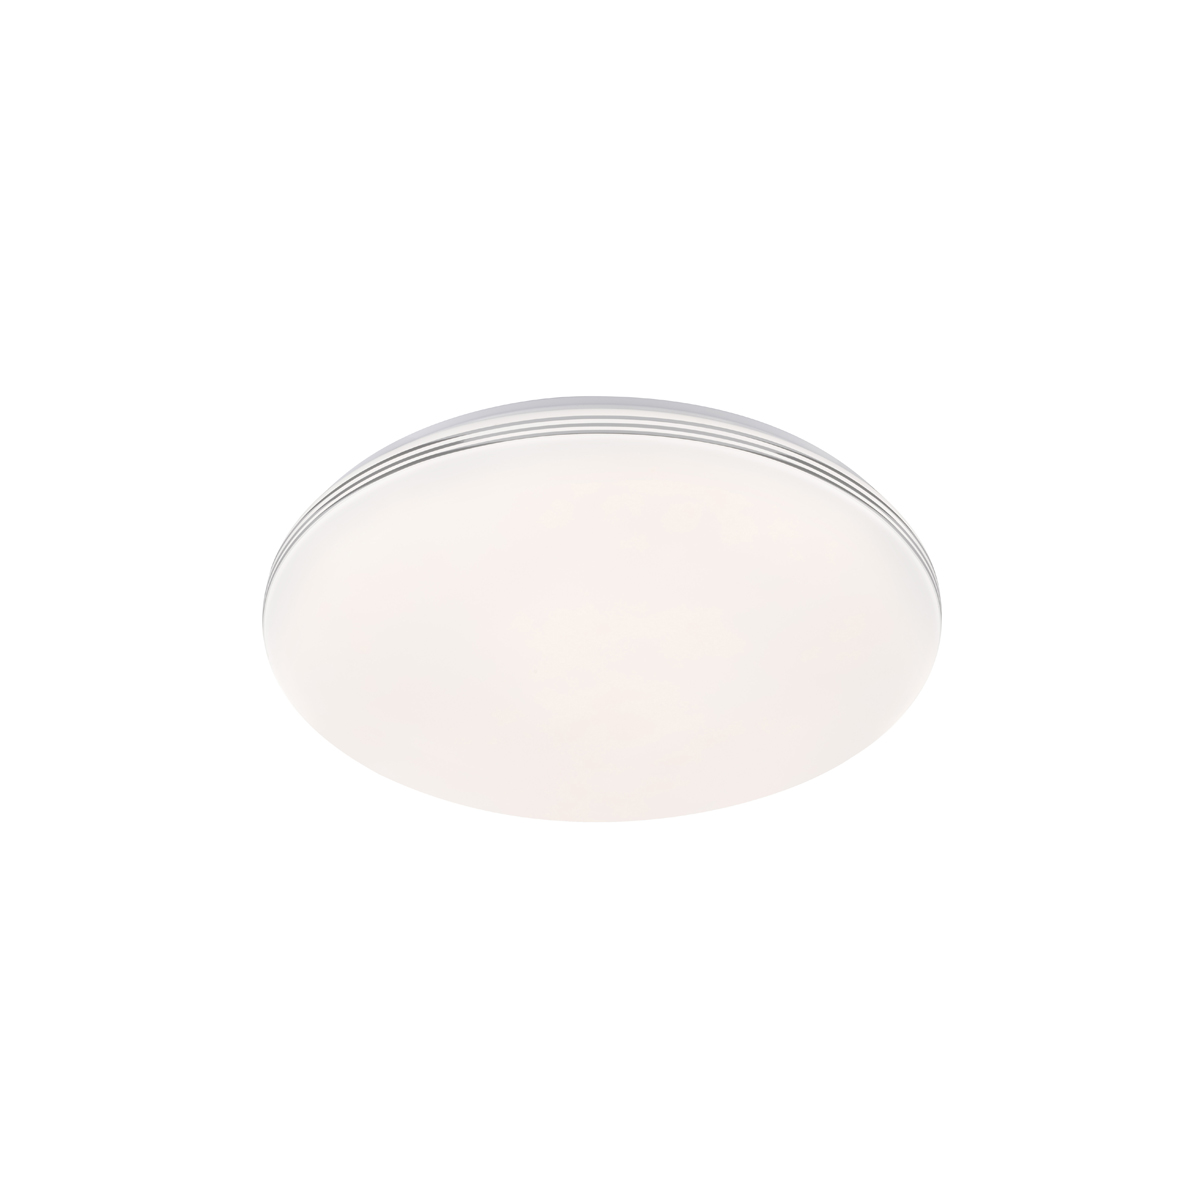 FISCHER & HONSEL 21104 Faro lampa sufitowa biały, chrom